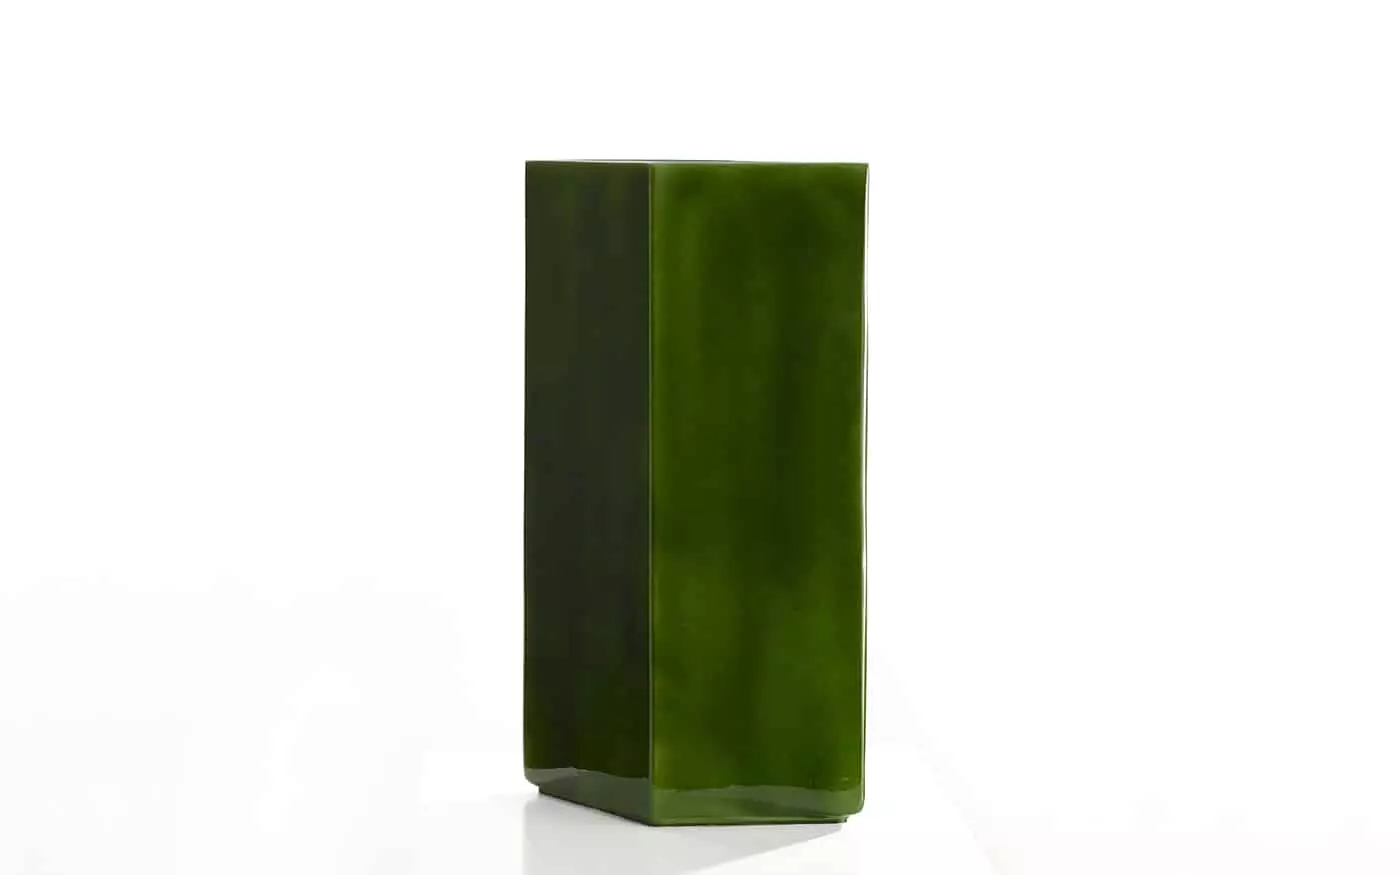 Vase Losange 84 green - Ronan & Erwan Bouroullec - Miscellaneous - Galerie kreo